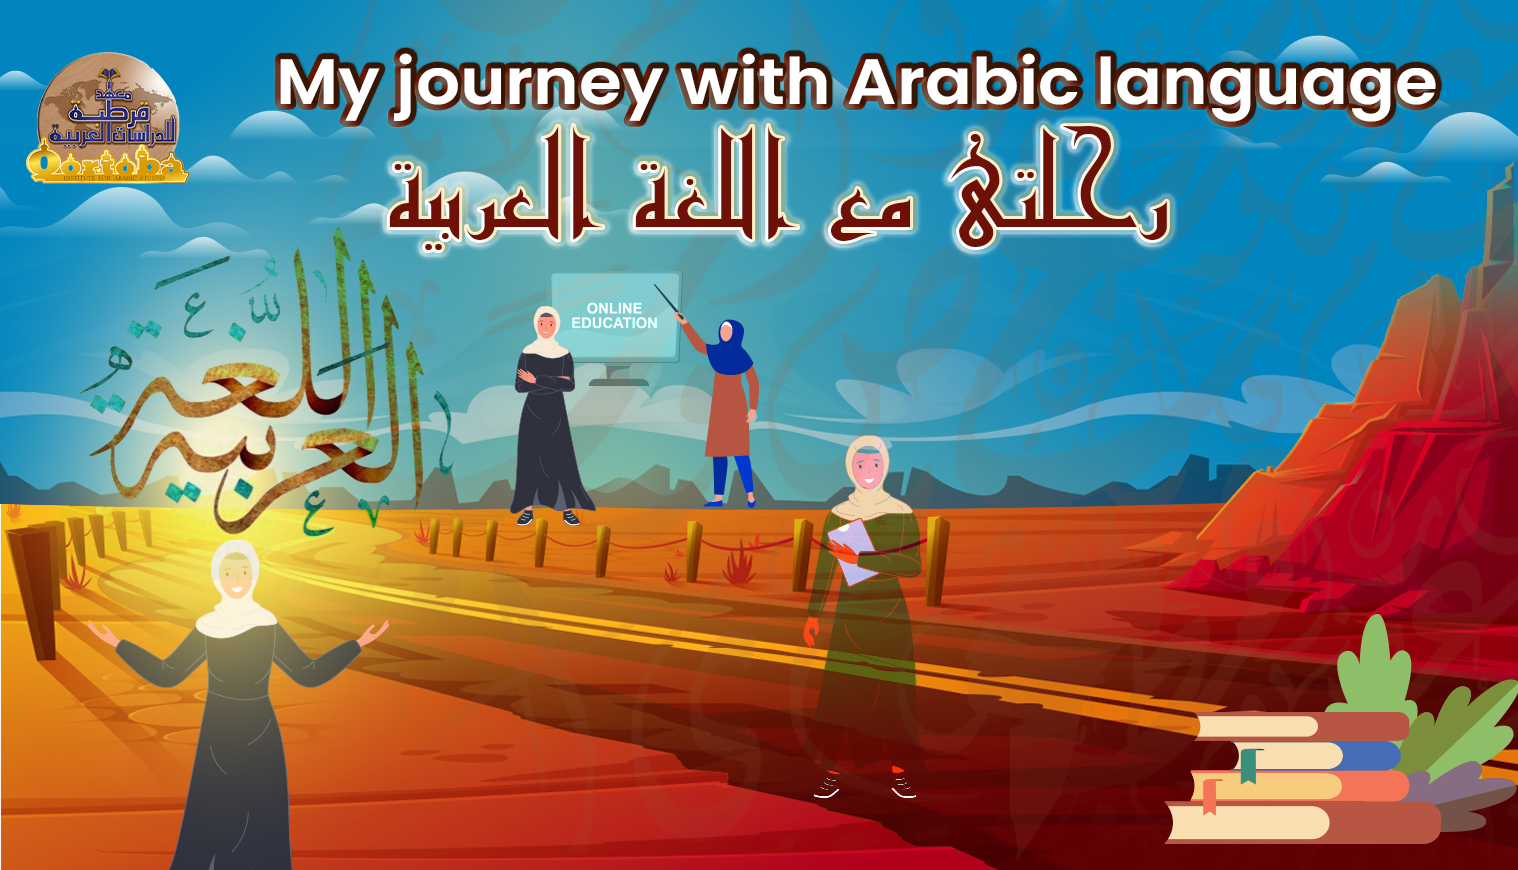 My journey with Arabic language by Saima Bhatty (UK) 4